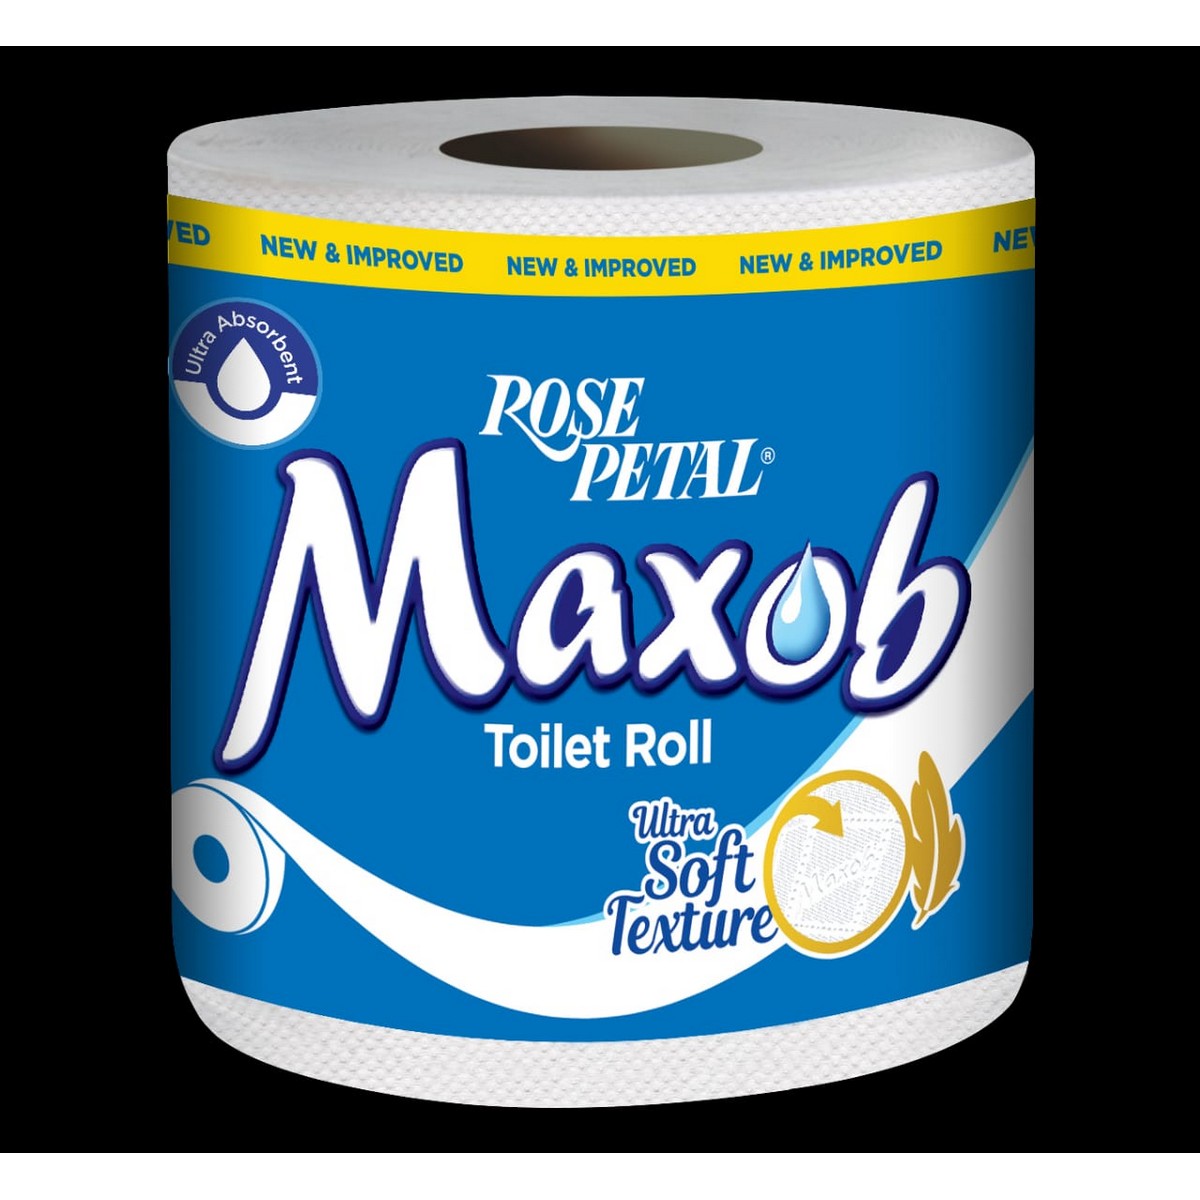 Rose Petal Maxob Single Toilet Roll